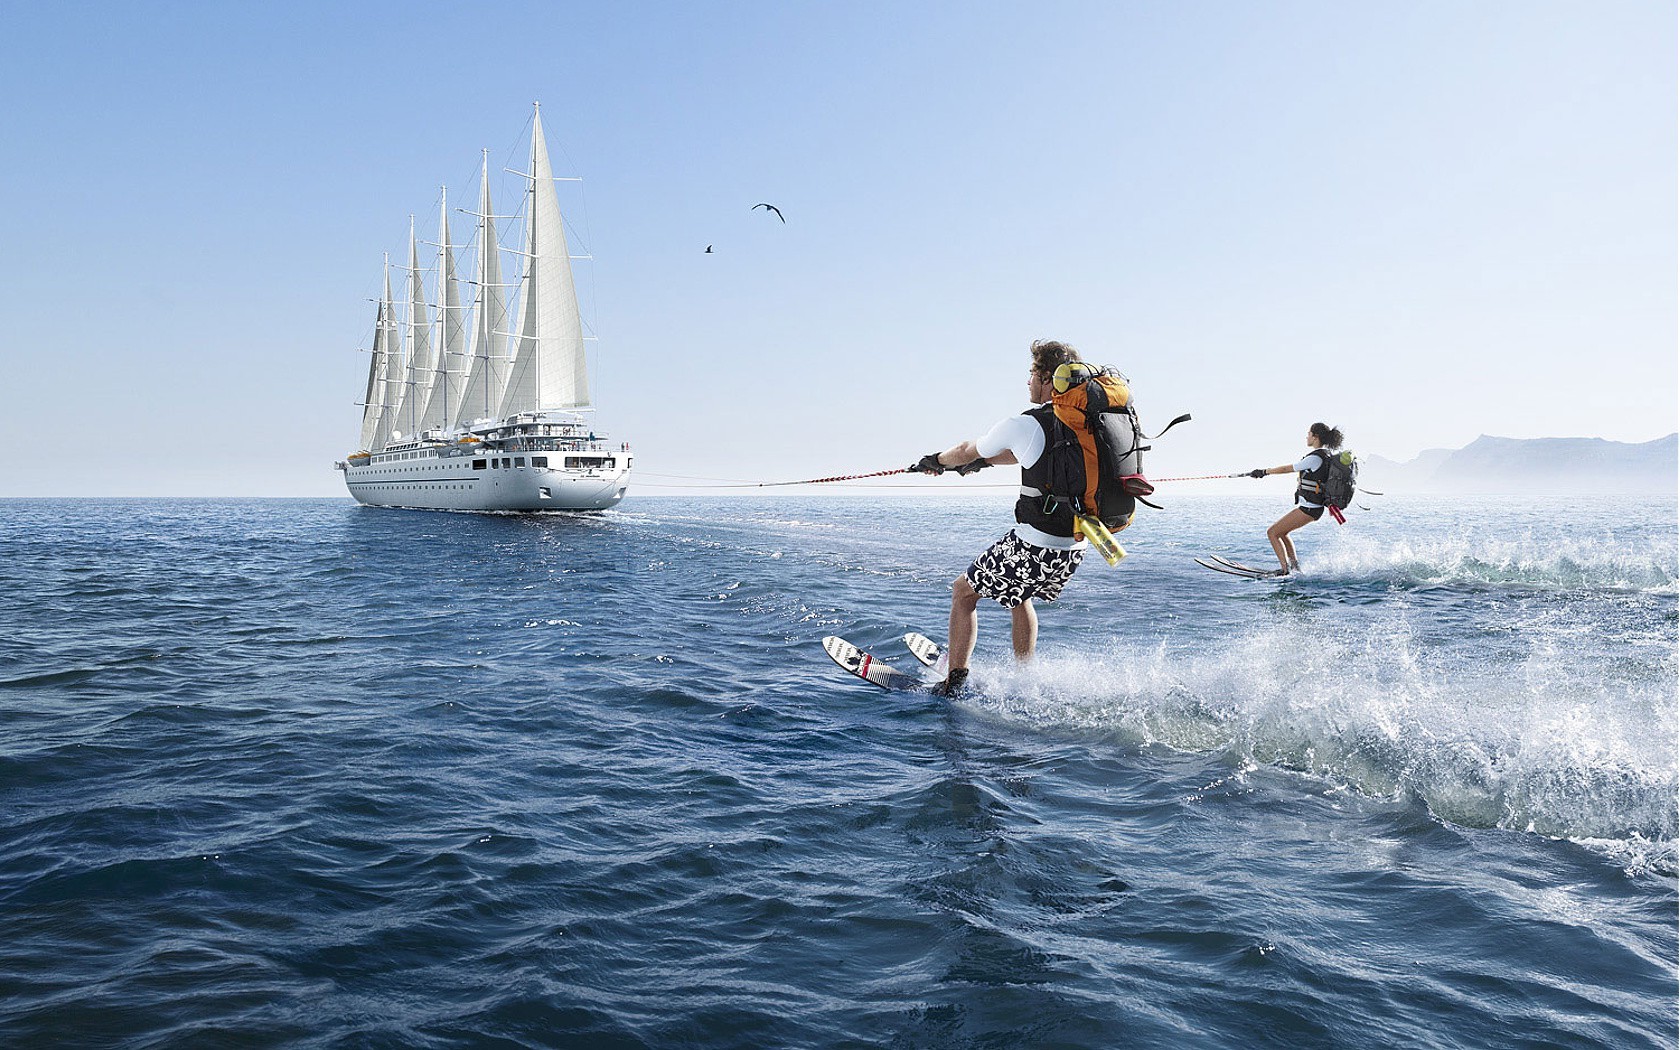 sports-digital-art-boat-sailing-ship-sea-humor-vehicle-wind-windsurfing-sailing-water-ski-wave-sail-boating-1680x1050-px-wind-wave-extreme-sport-water-sport-windsports-sailboat-racing-588449.jpg